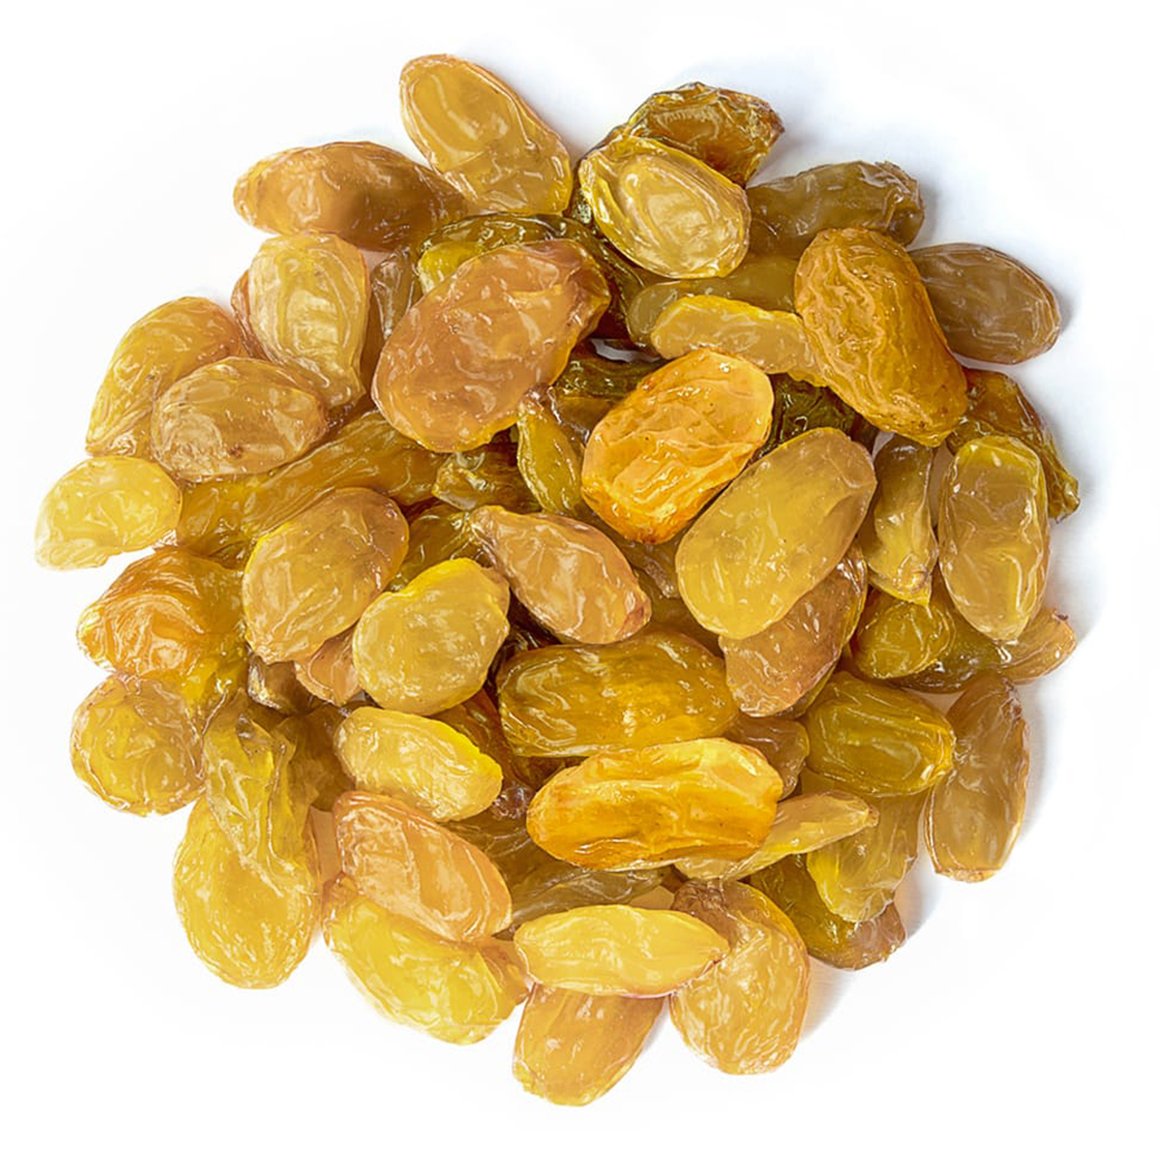 Golden Jumbo Raisins Buy in Bulk from Food to Live